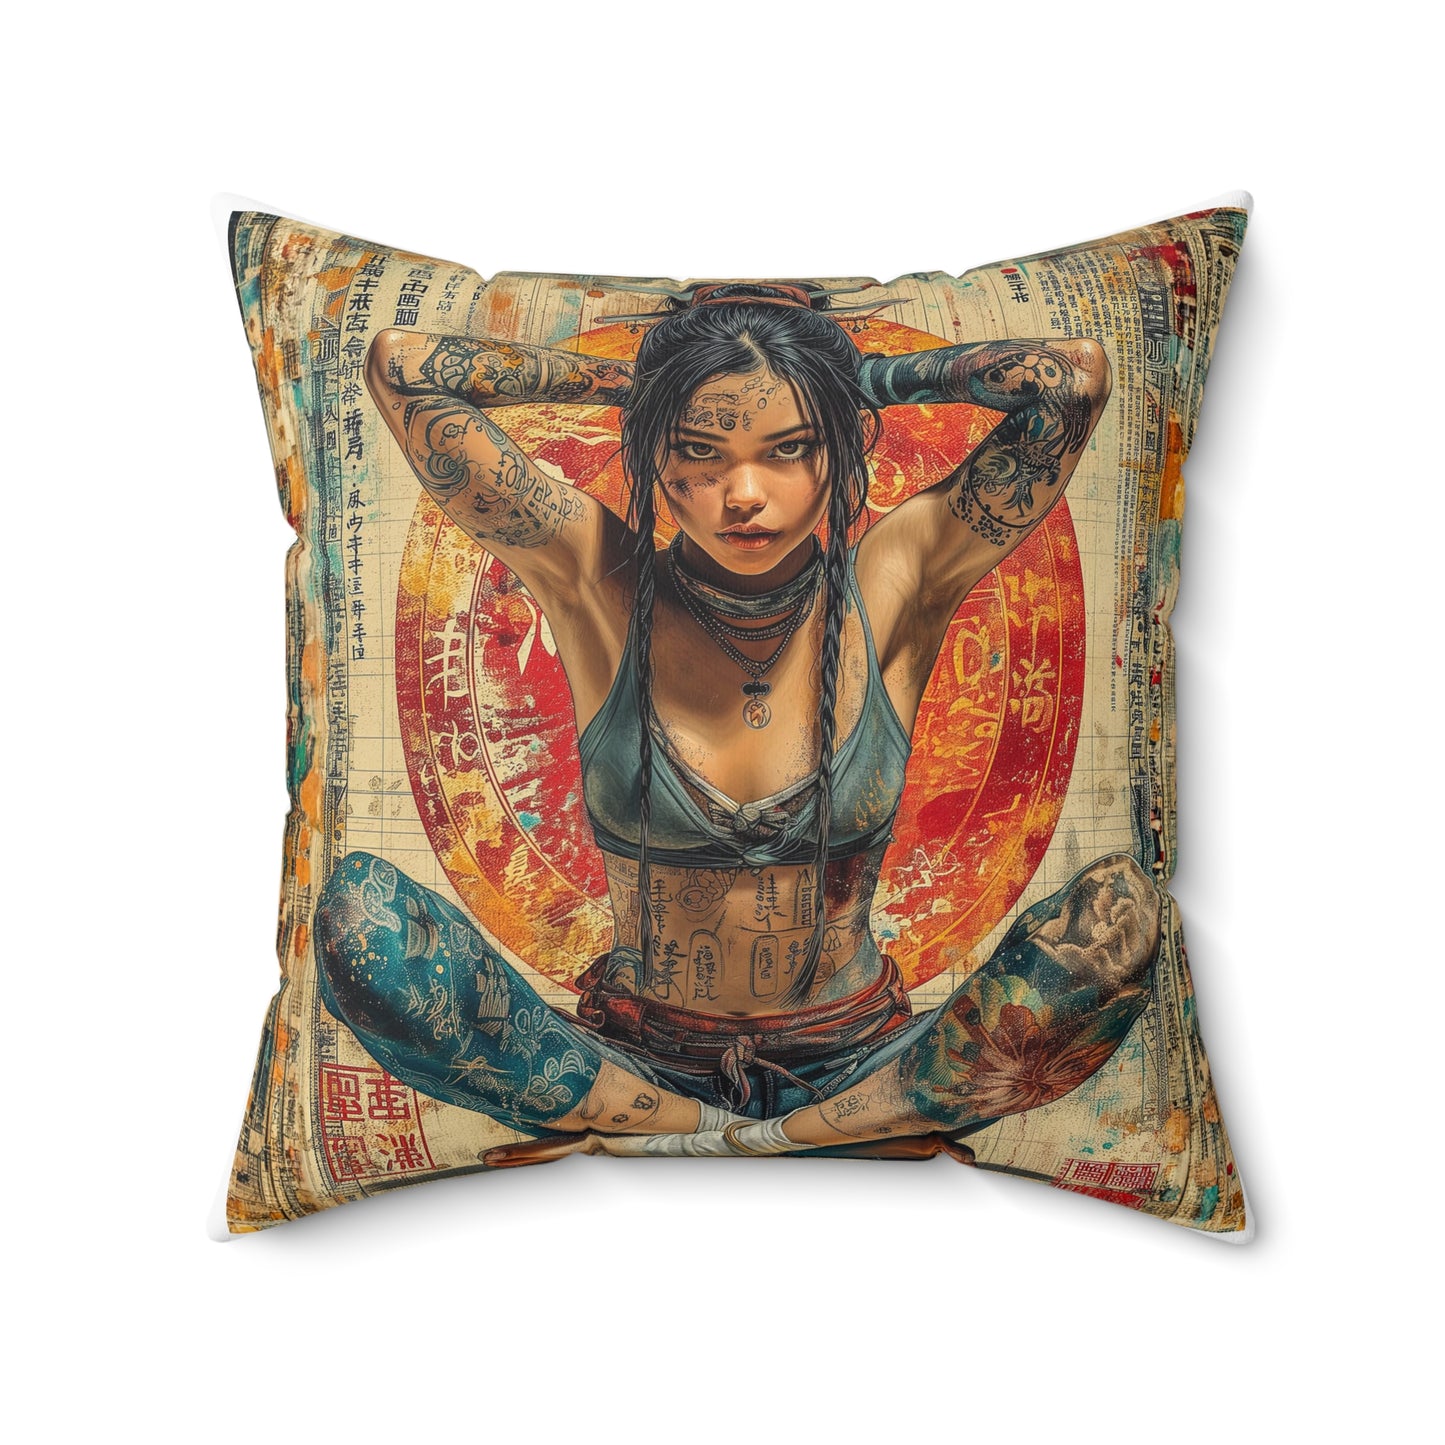 Asia Icongraphy Pillow